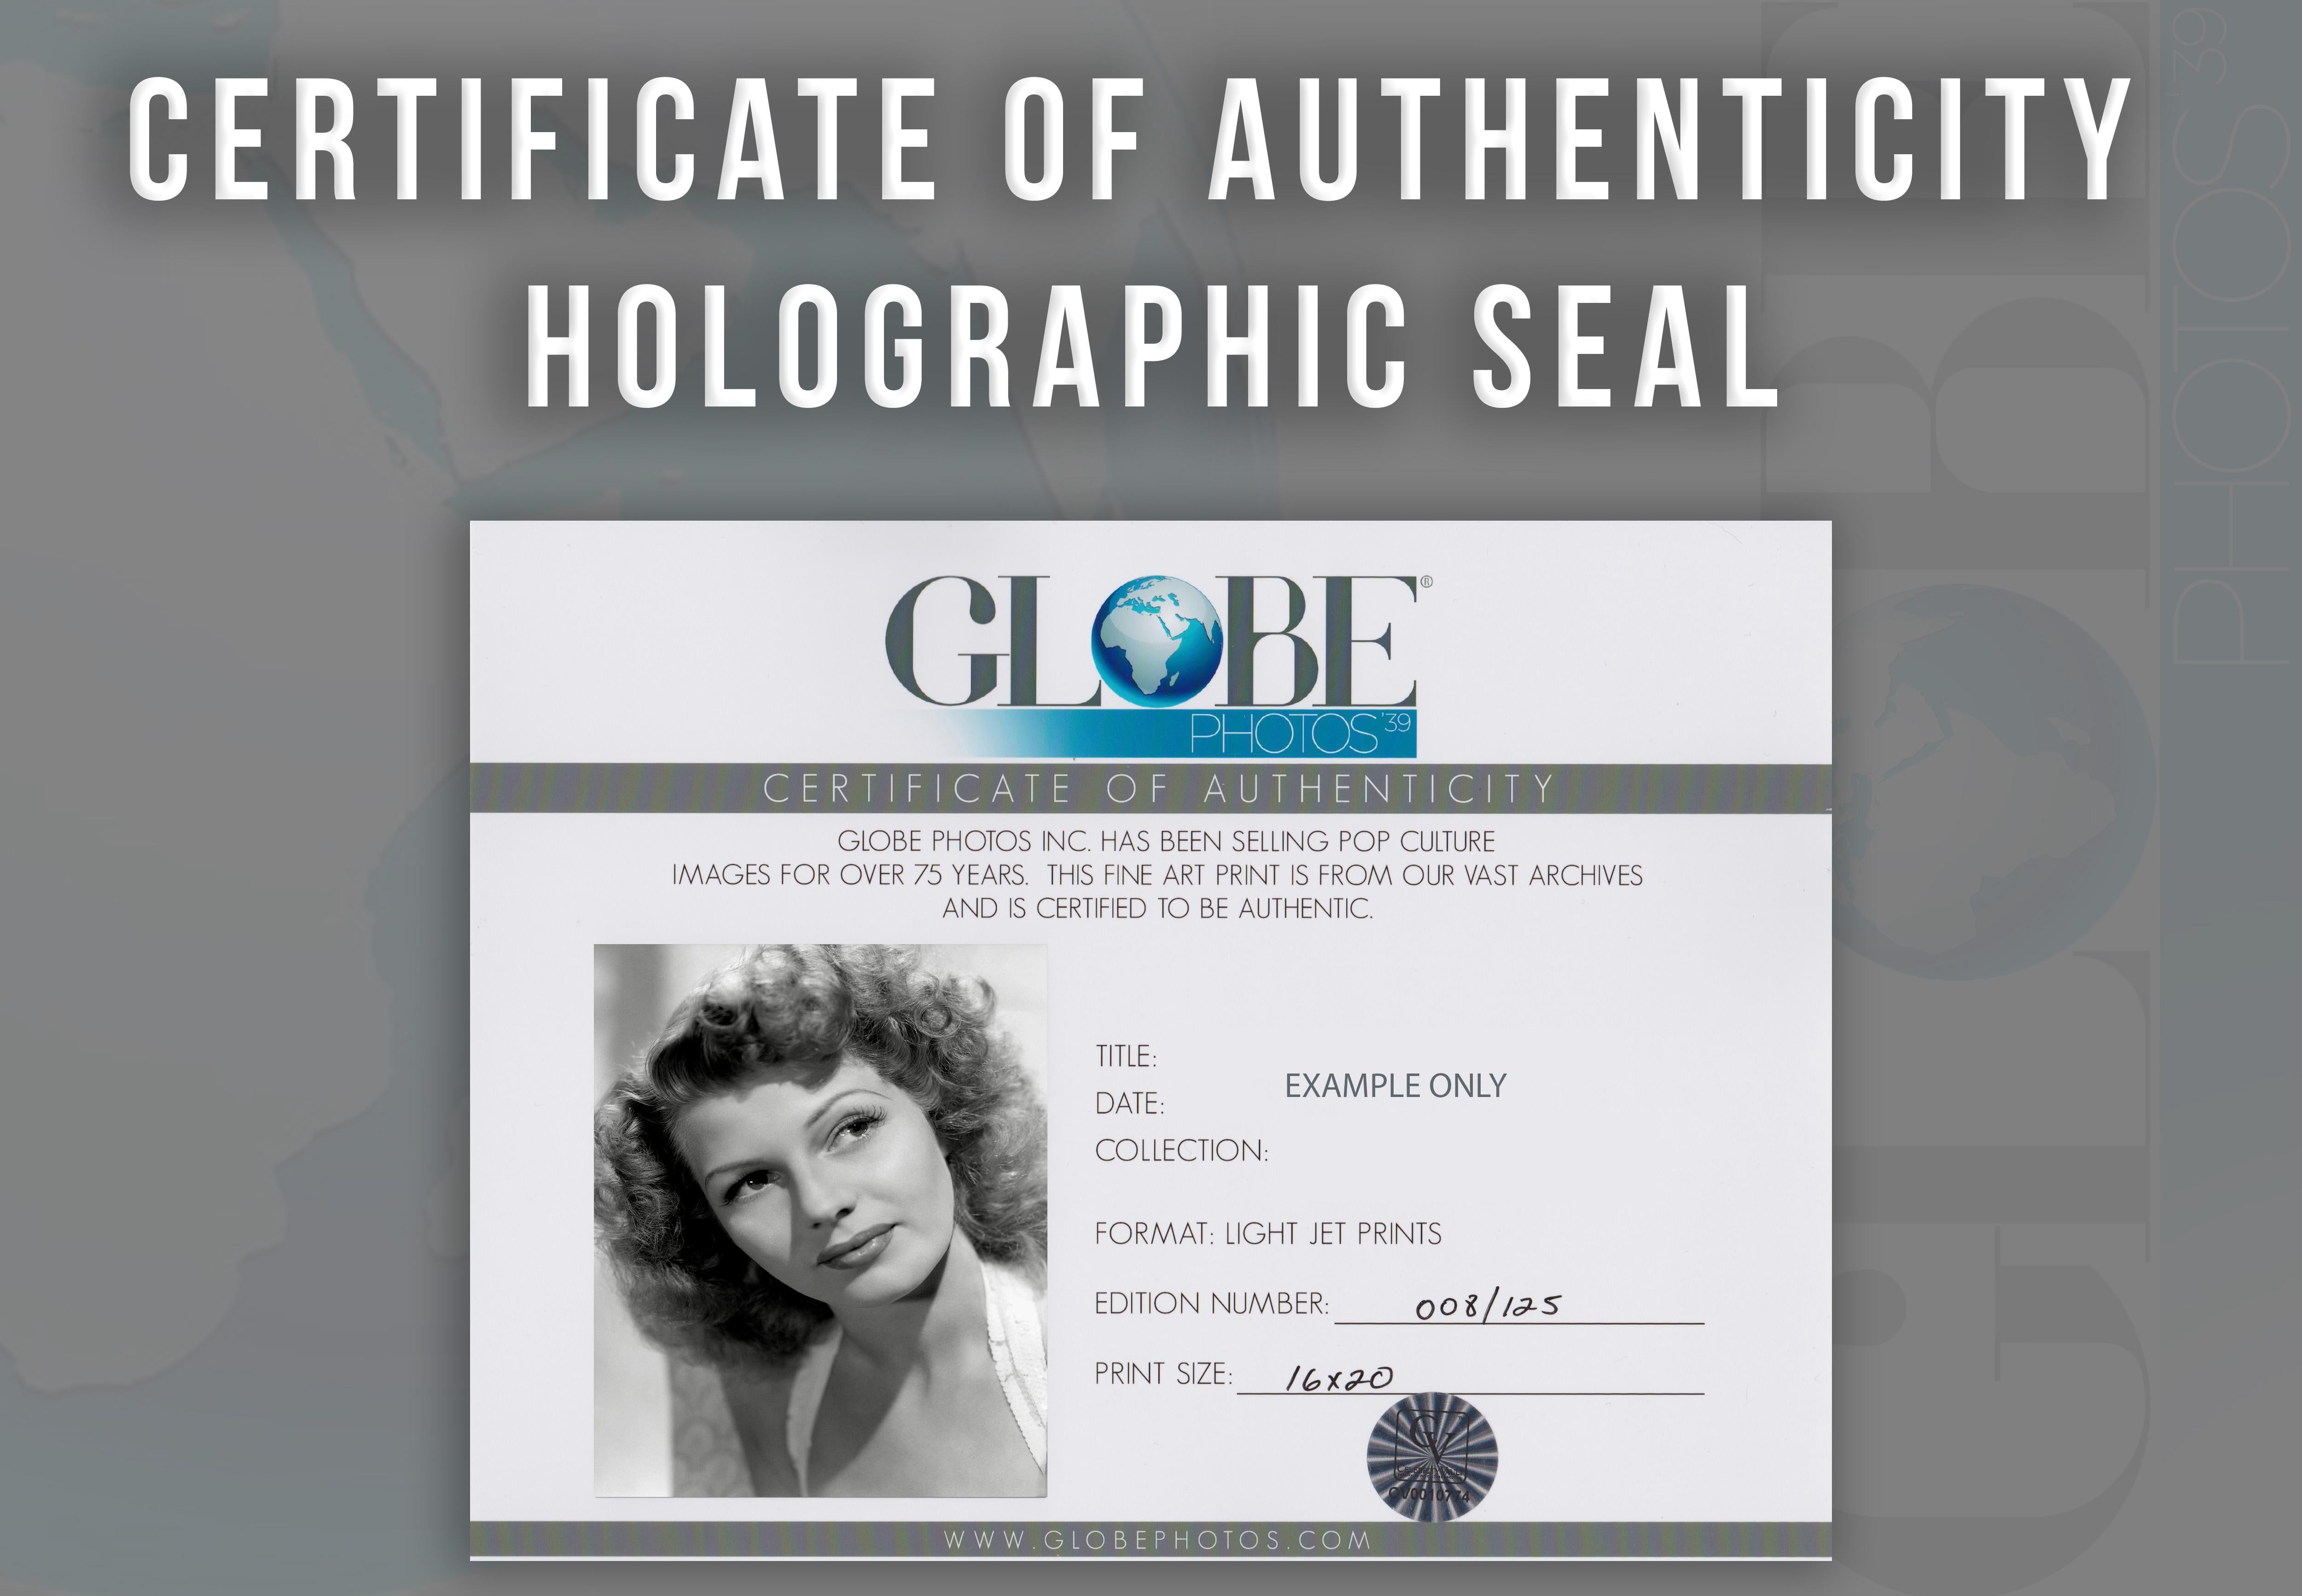 Rita Hayworth Classical Portrait Globe Photos Fine Art Print - Gray Portrait Photograph by Unknown